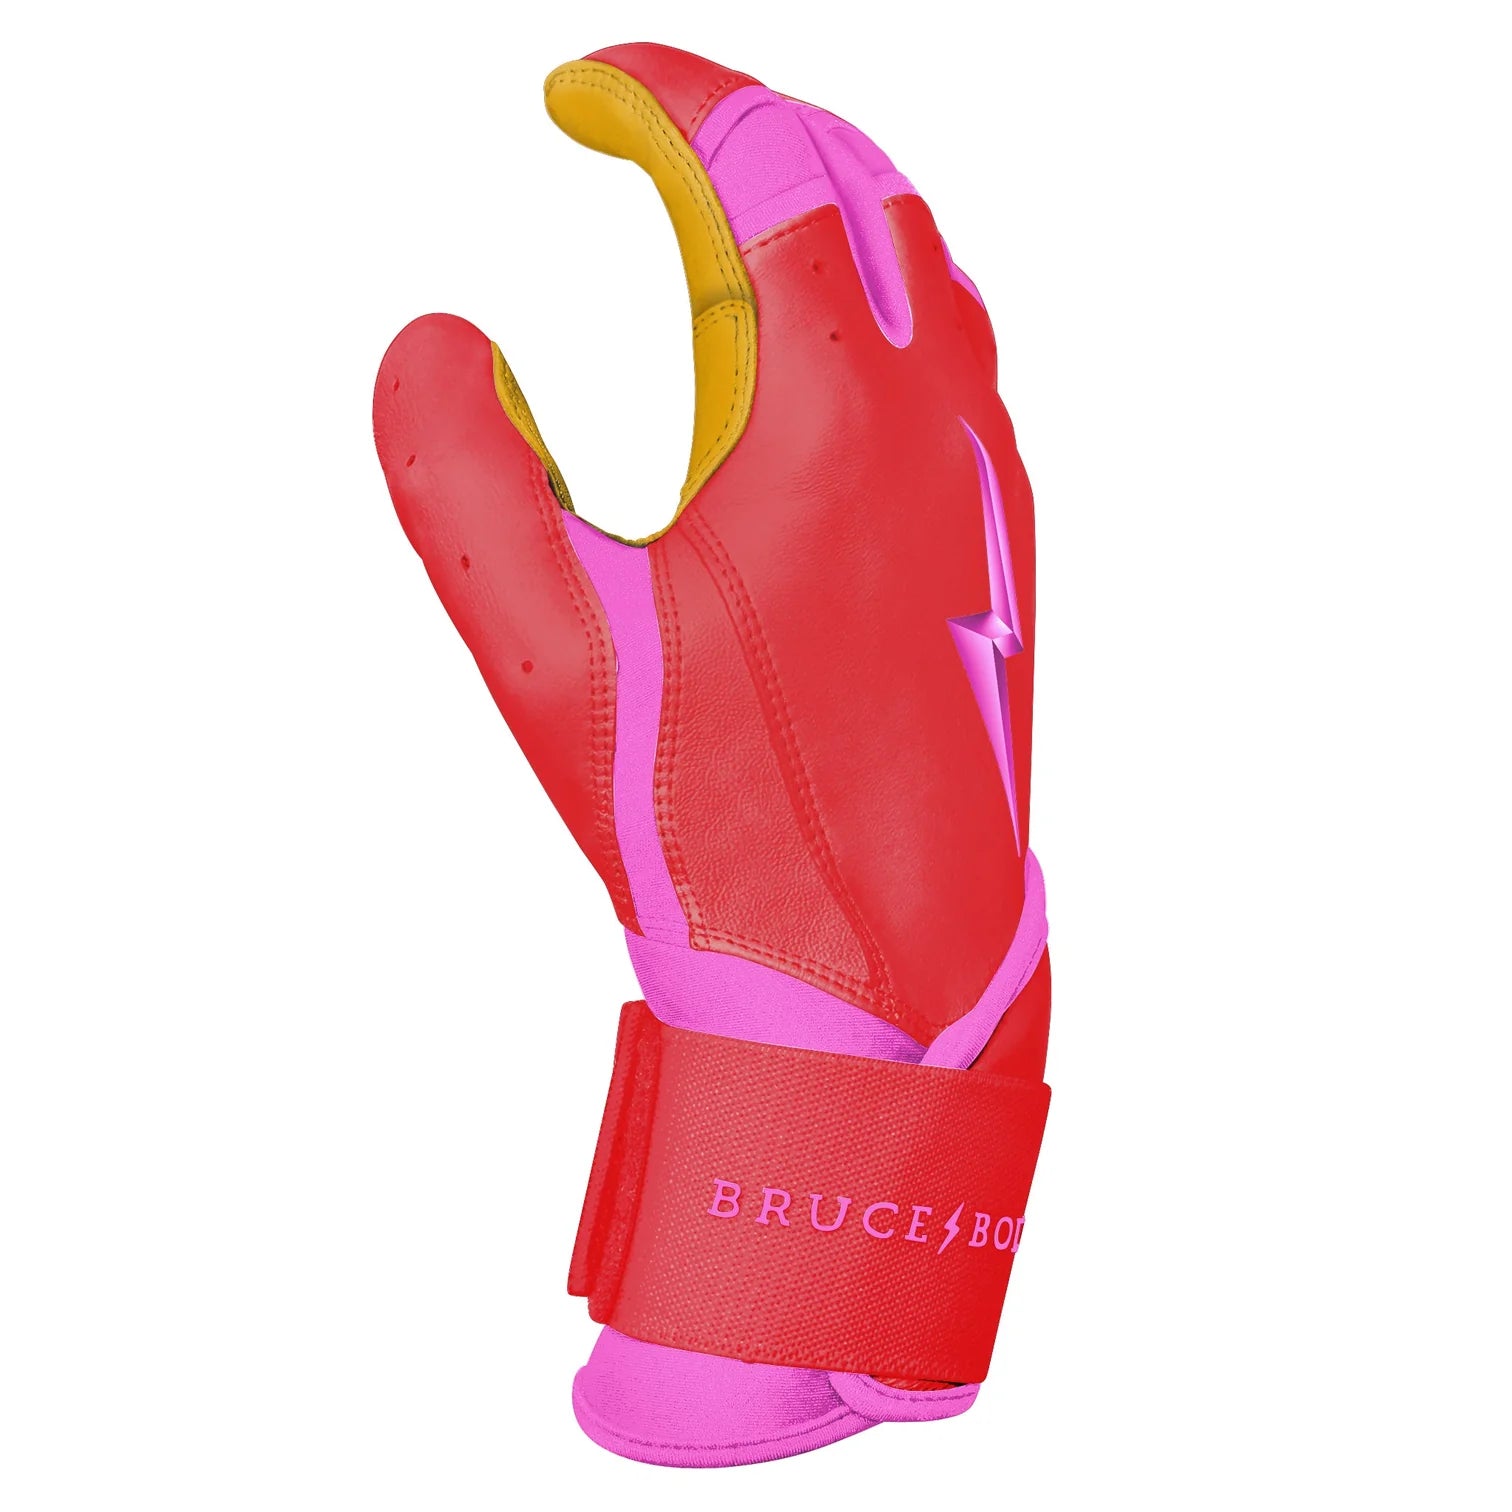 Bruce Bolt - BADER Series Pink Long Cuff